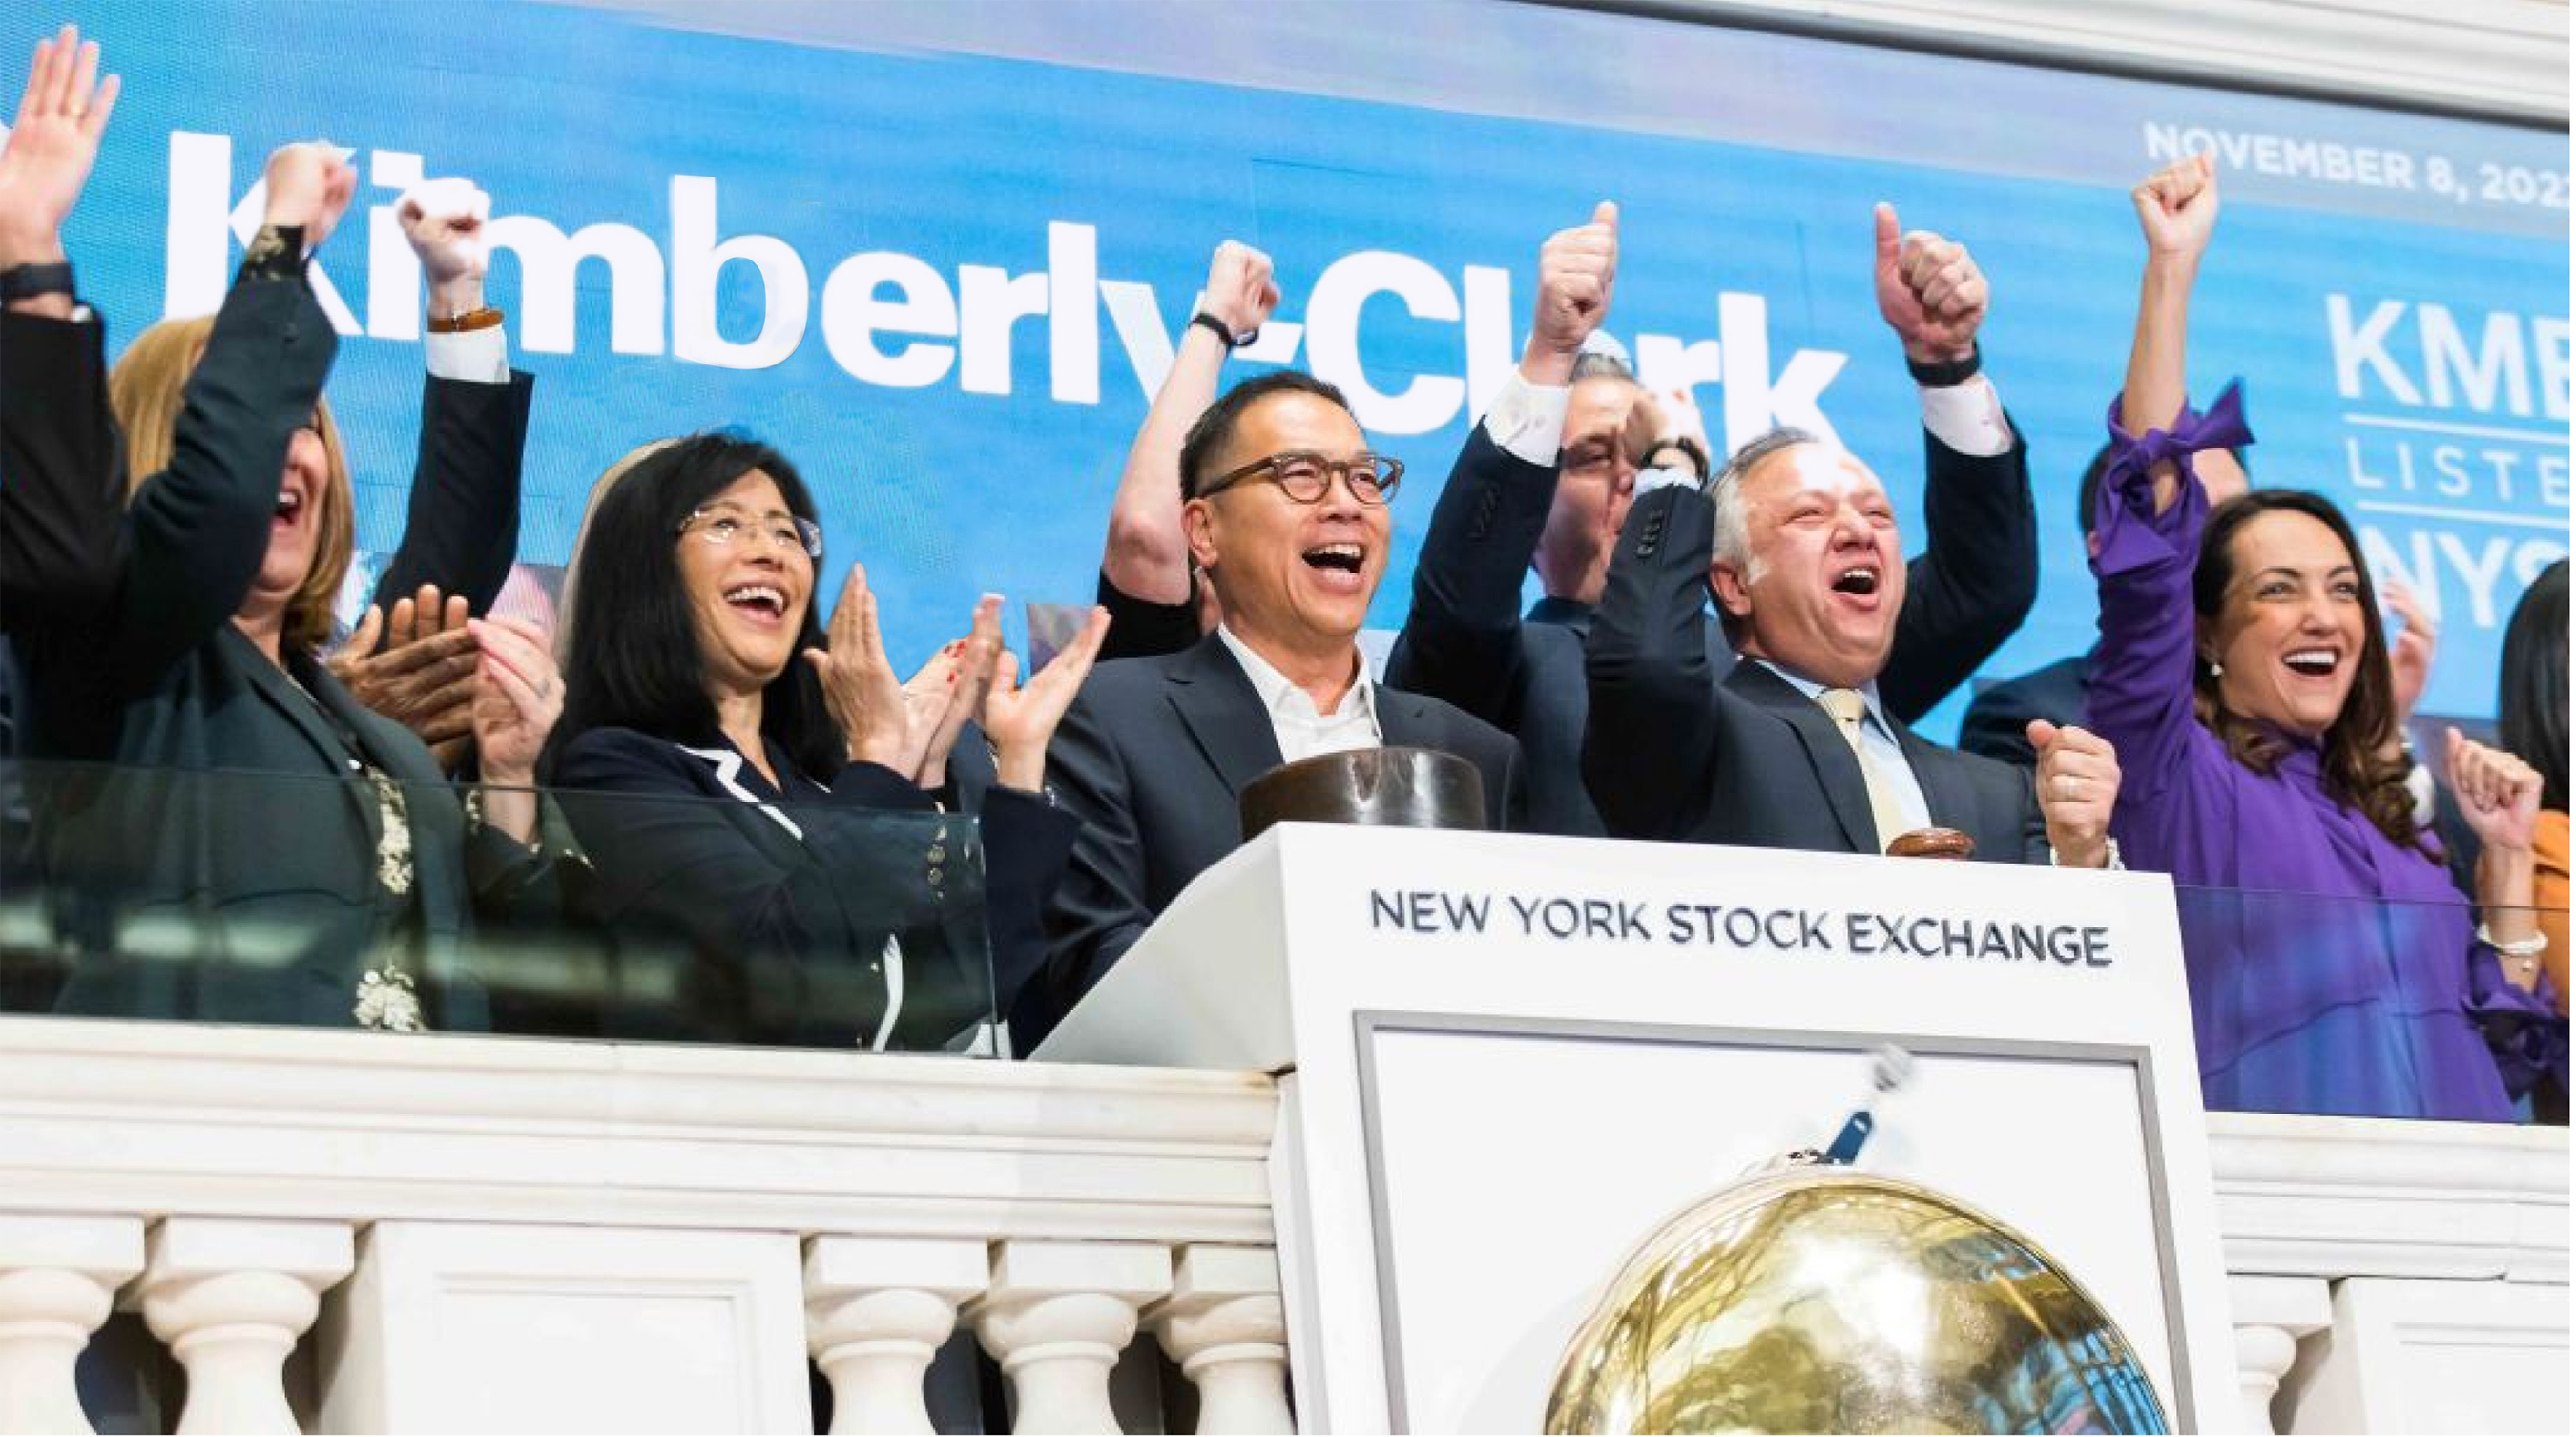 Kimberly-Clark's executive team at the New York Stock Exchange